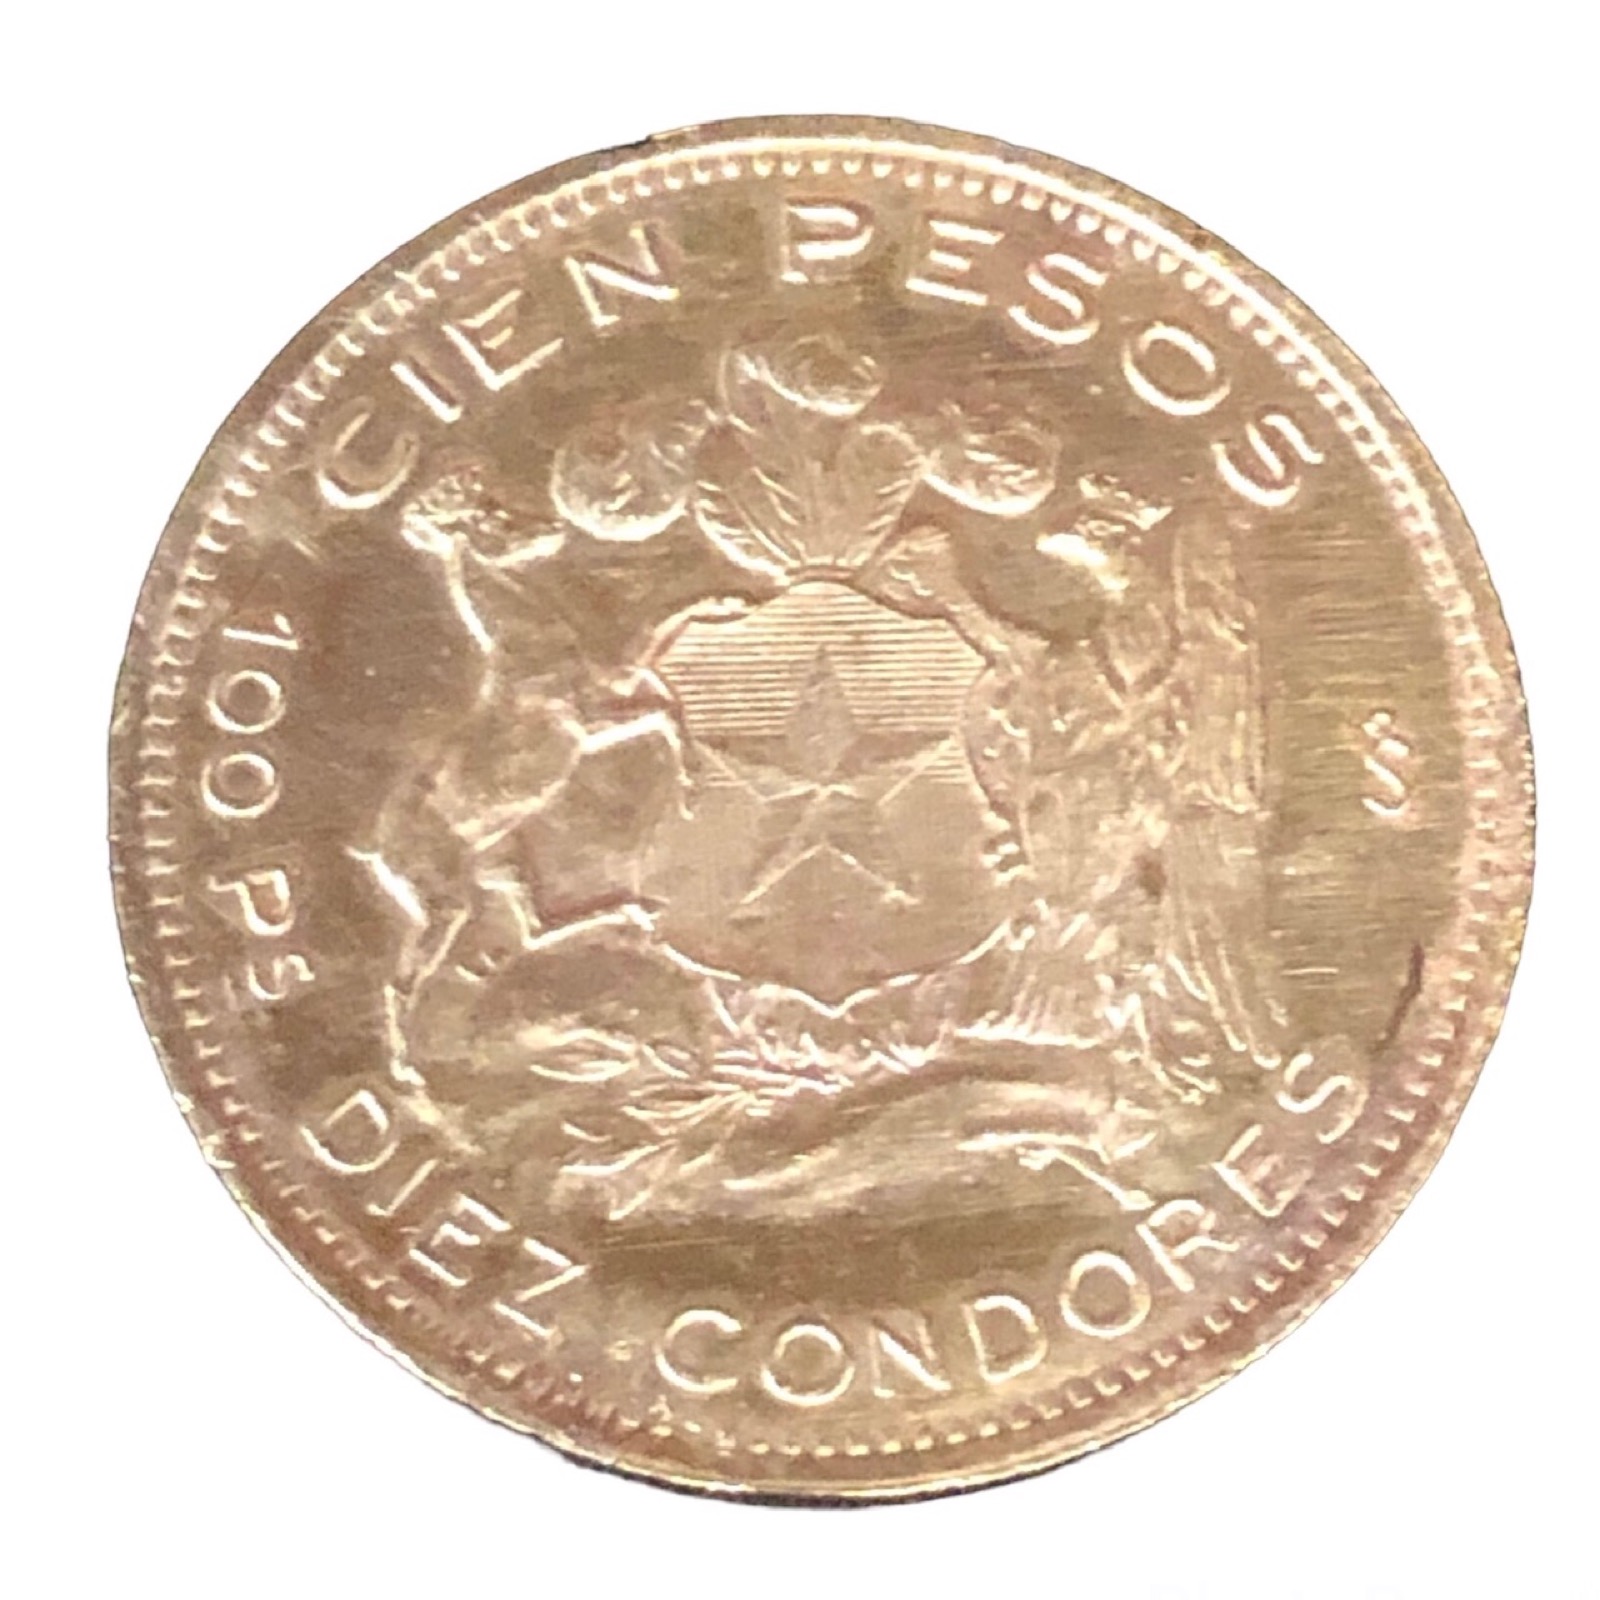 100 Pesos Chiliens / 10 Condores 1968